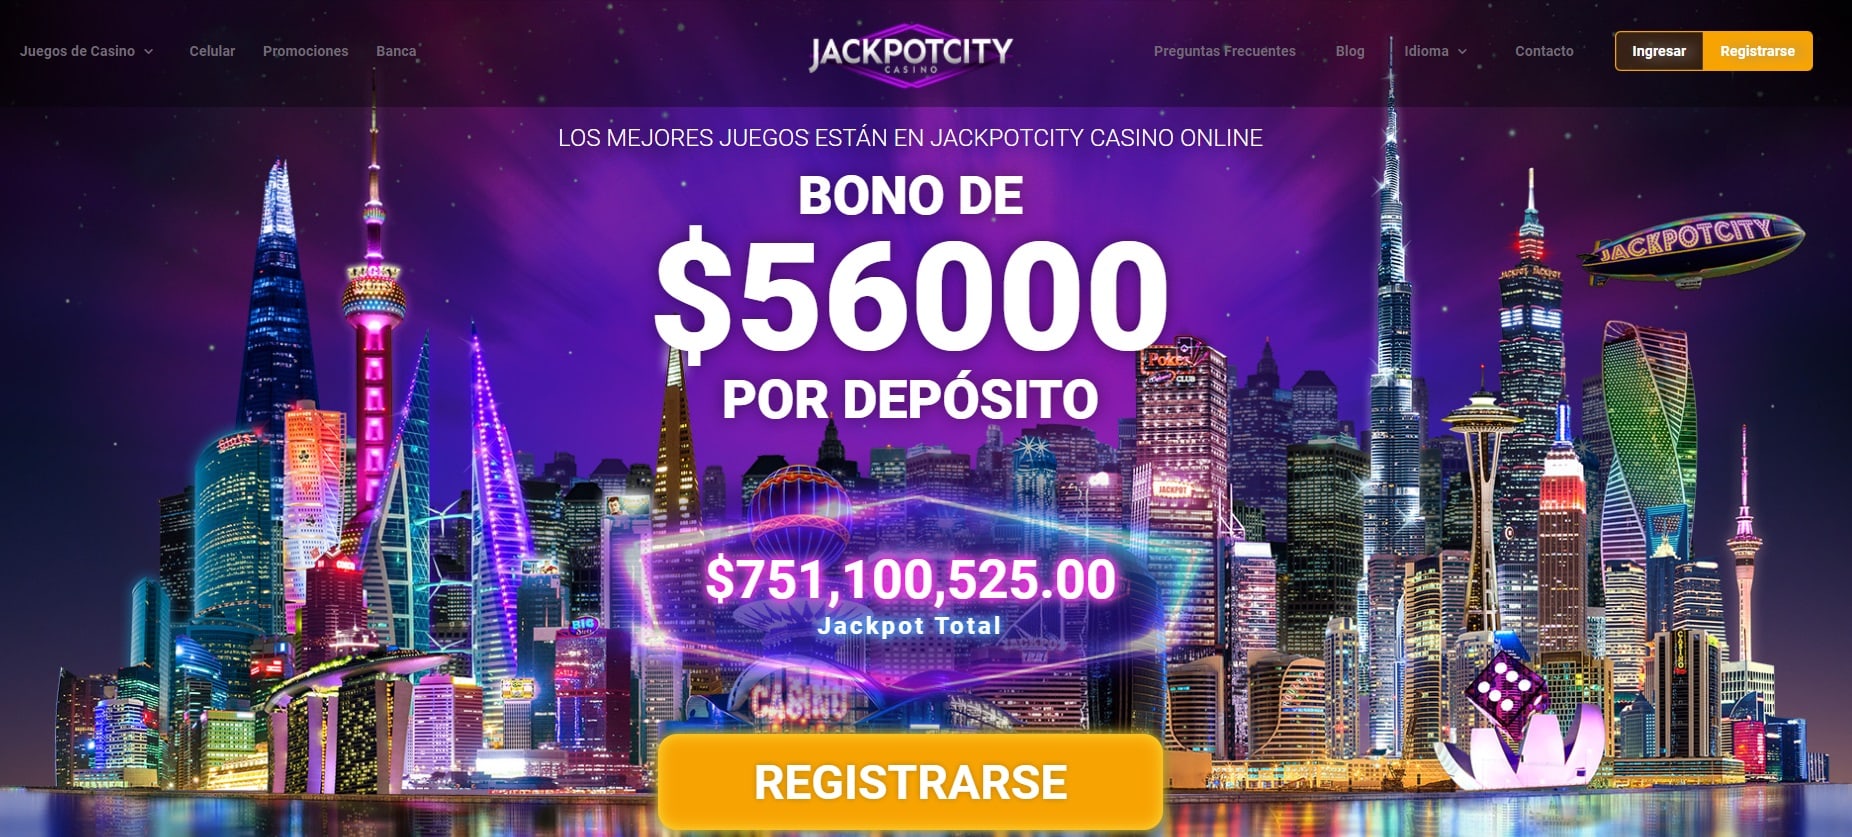 jackpot city casino argentina